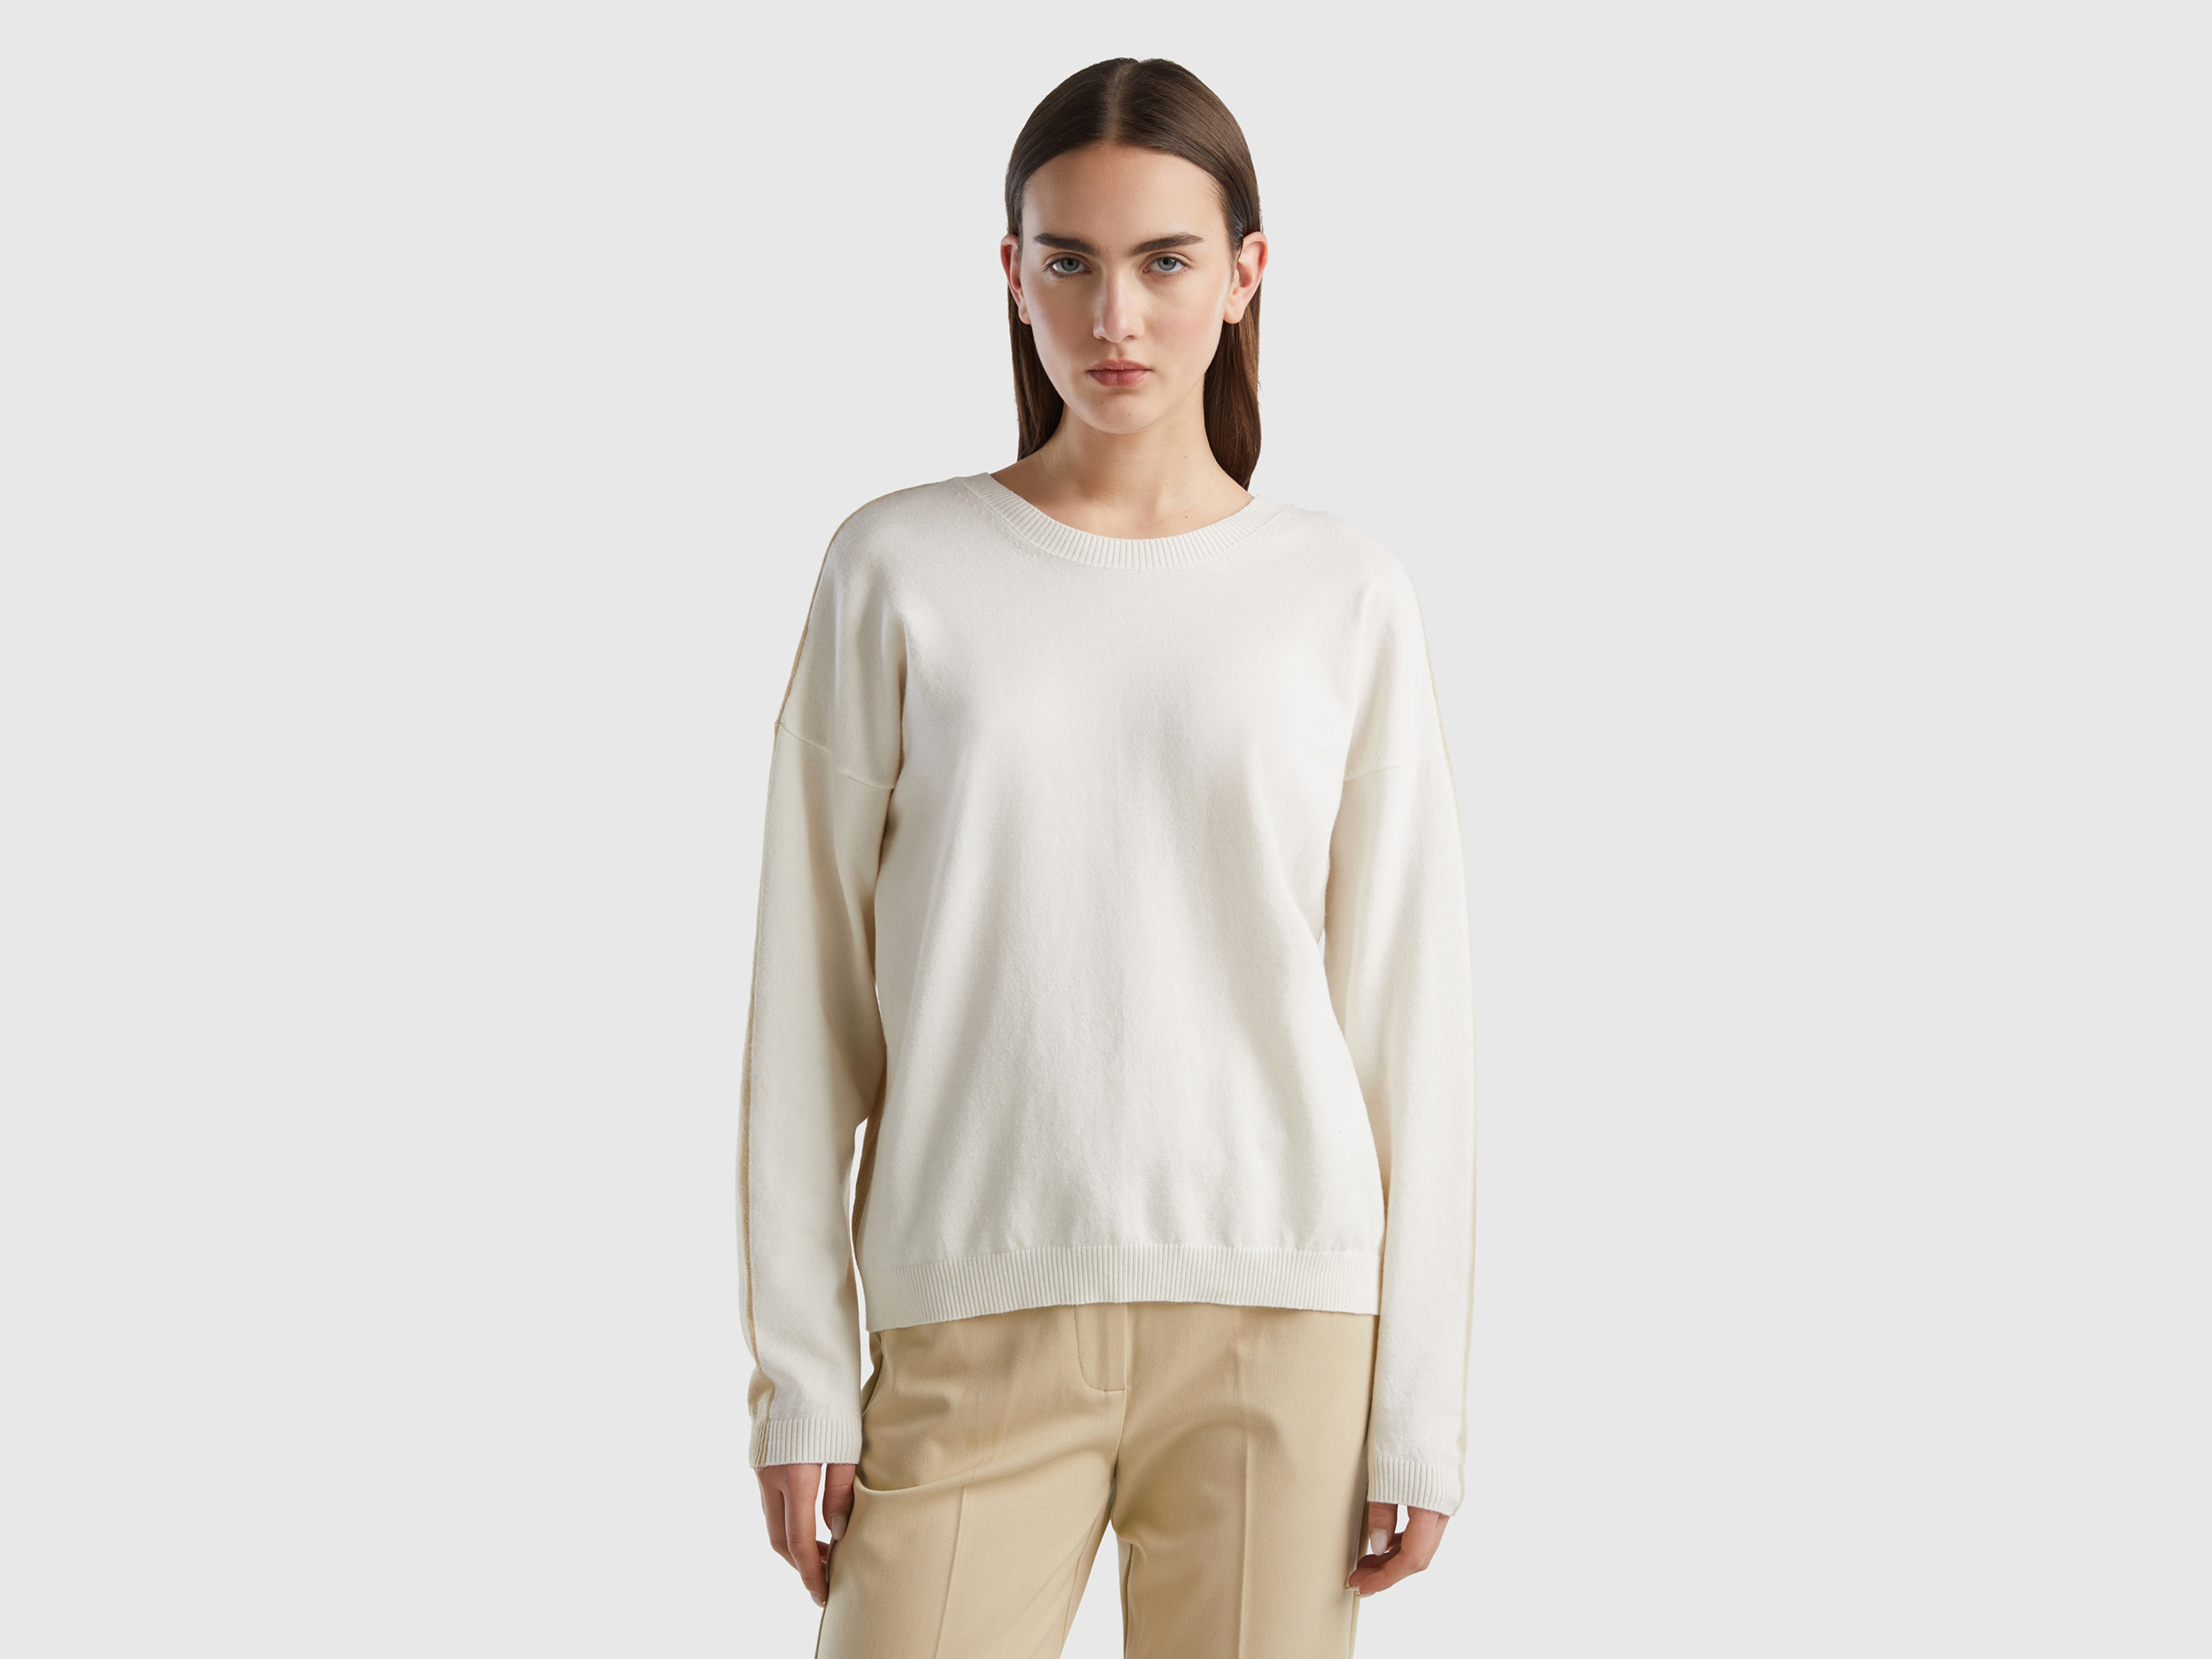 Benetton, Viscose Blend Sweater, size L, Creamy White, Women